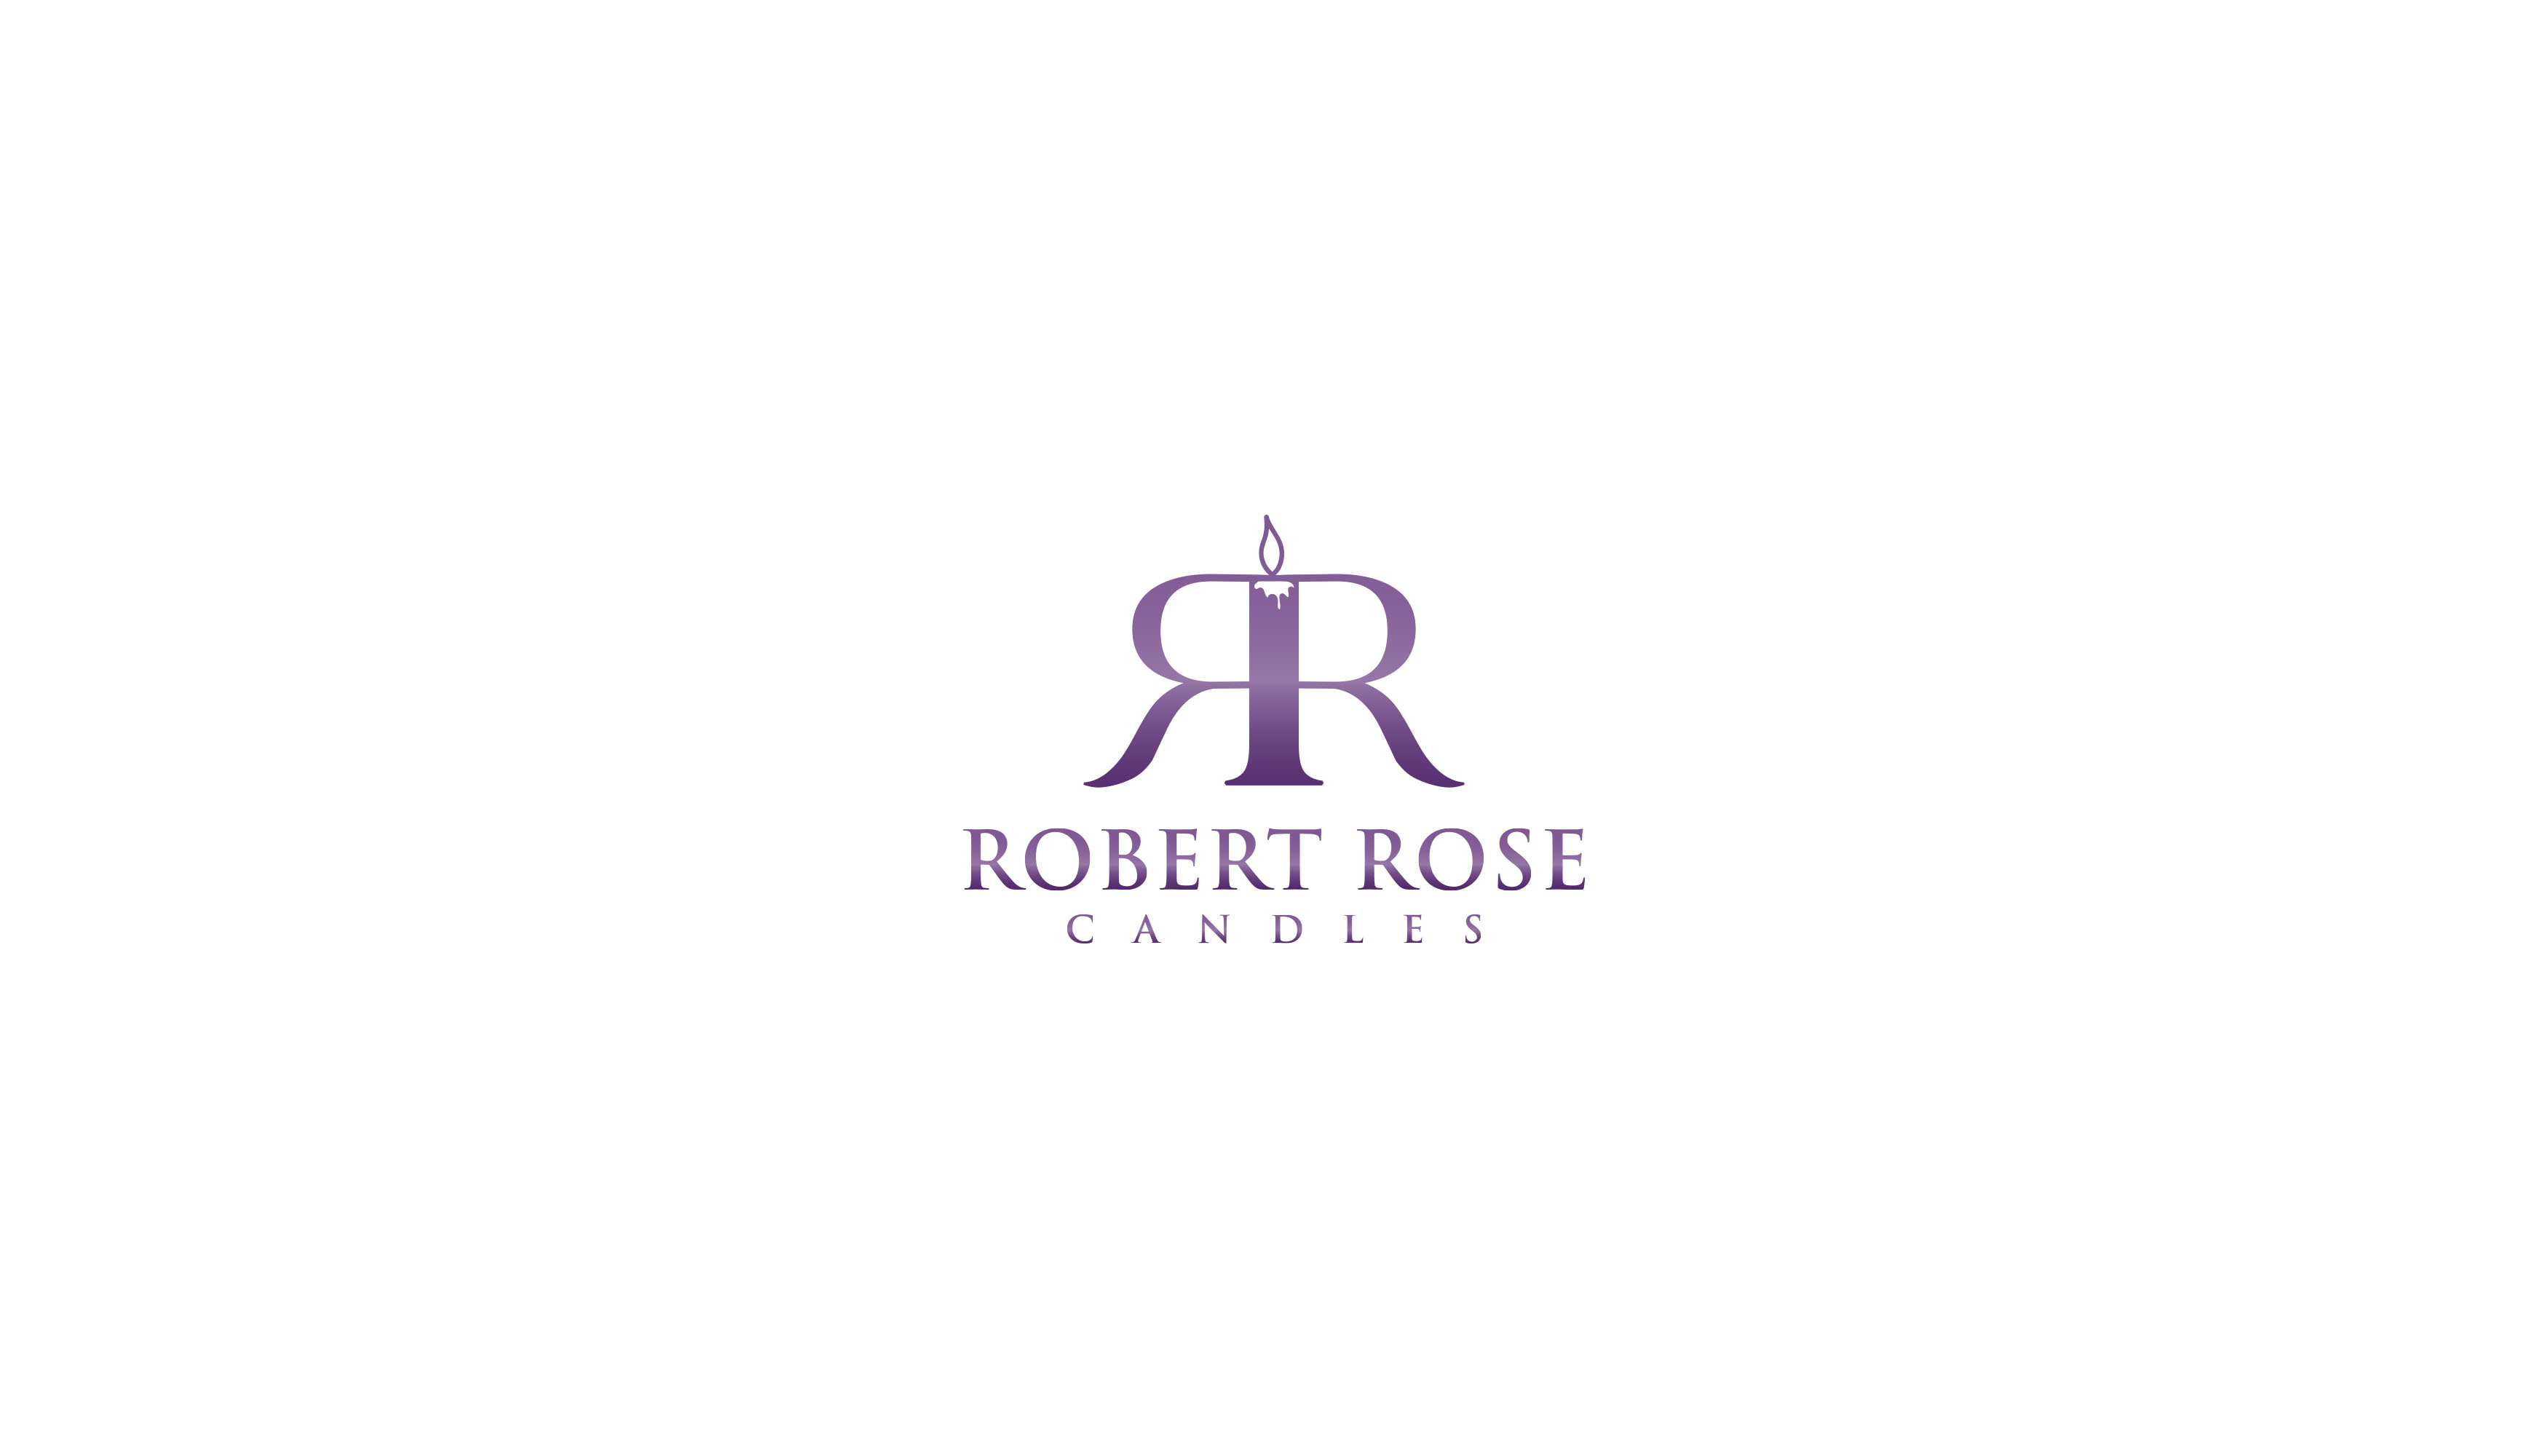 Robert Rose Candles Design #3